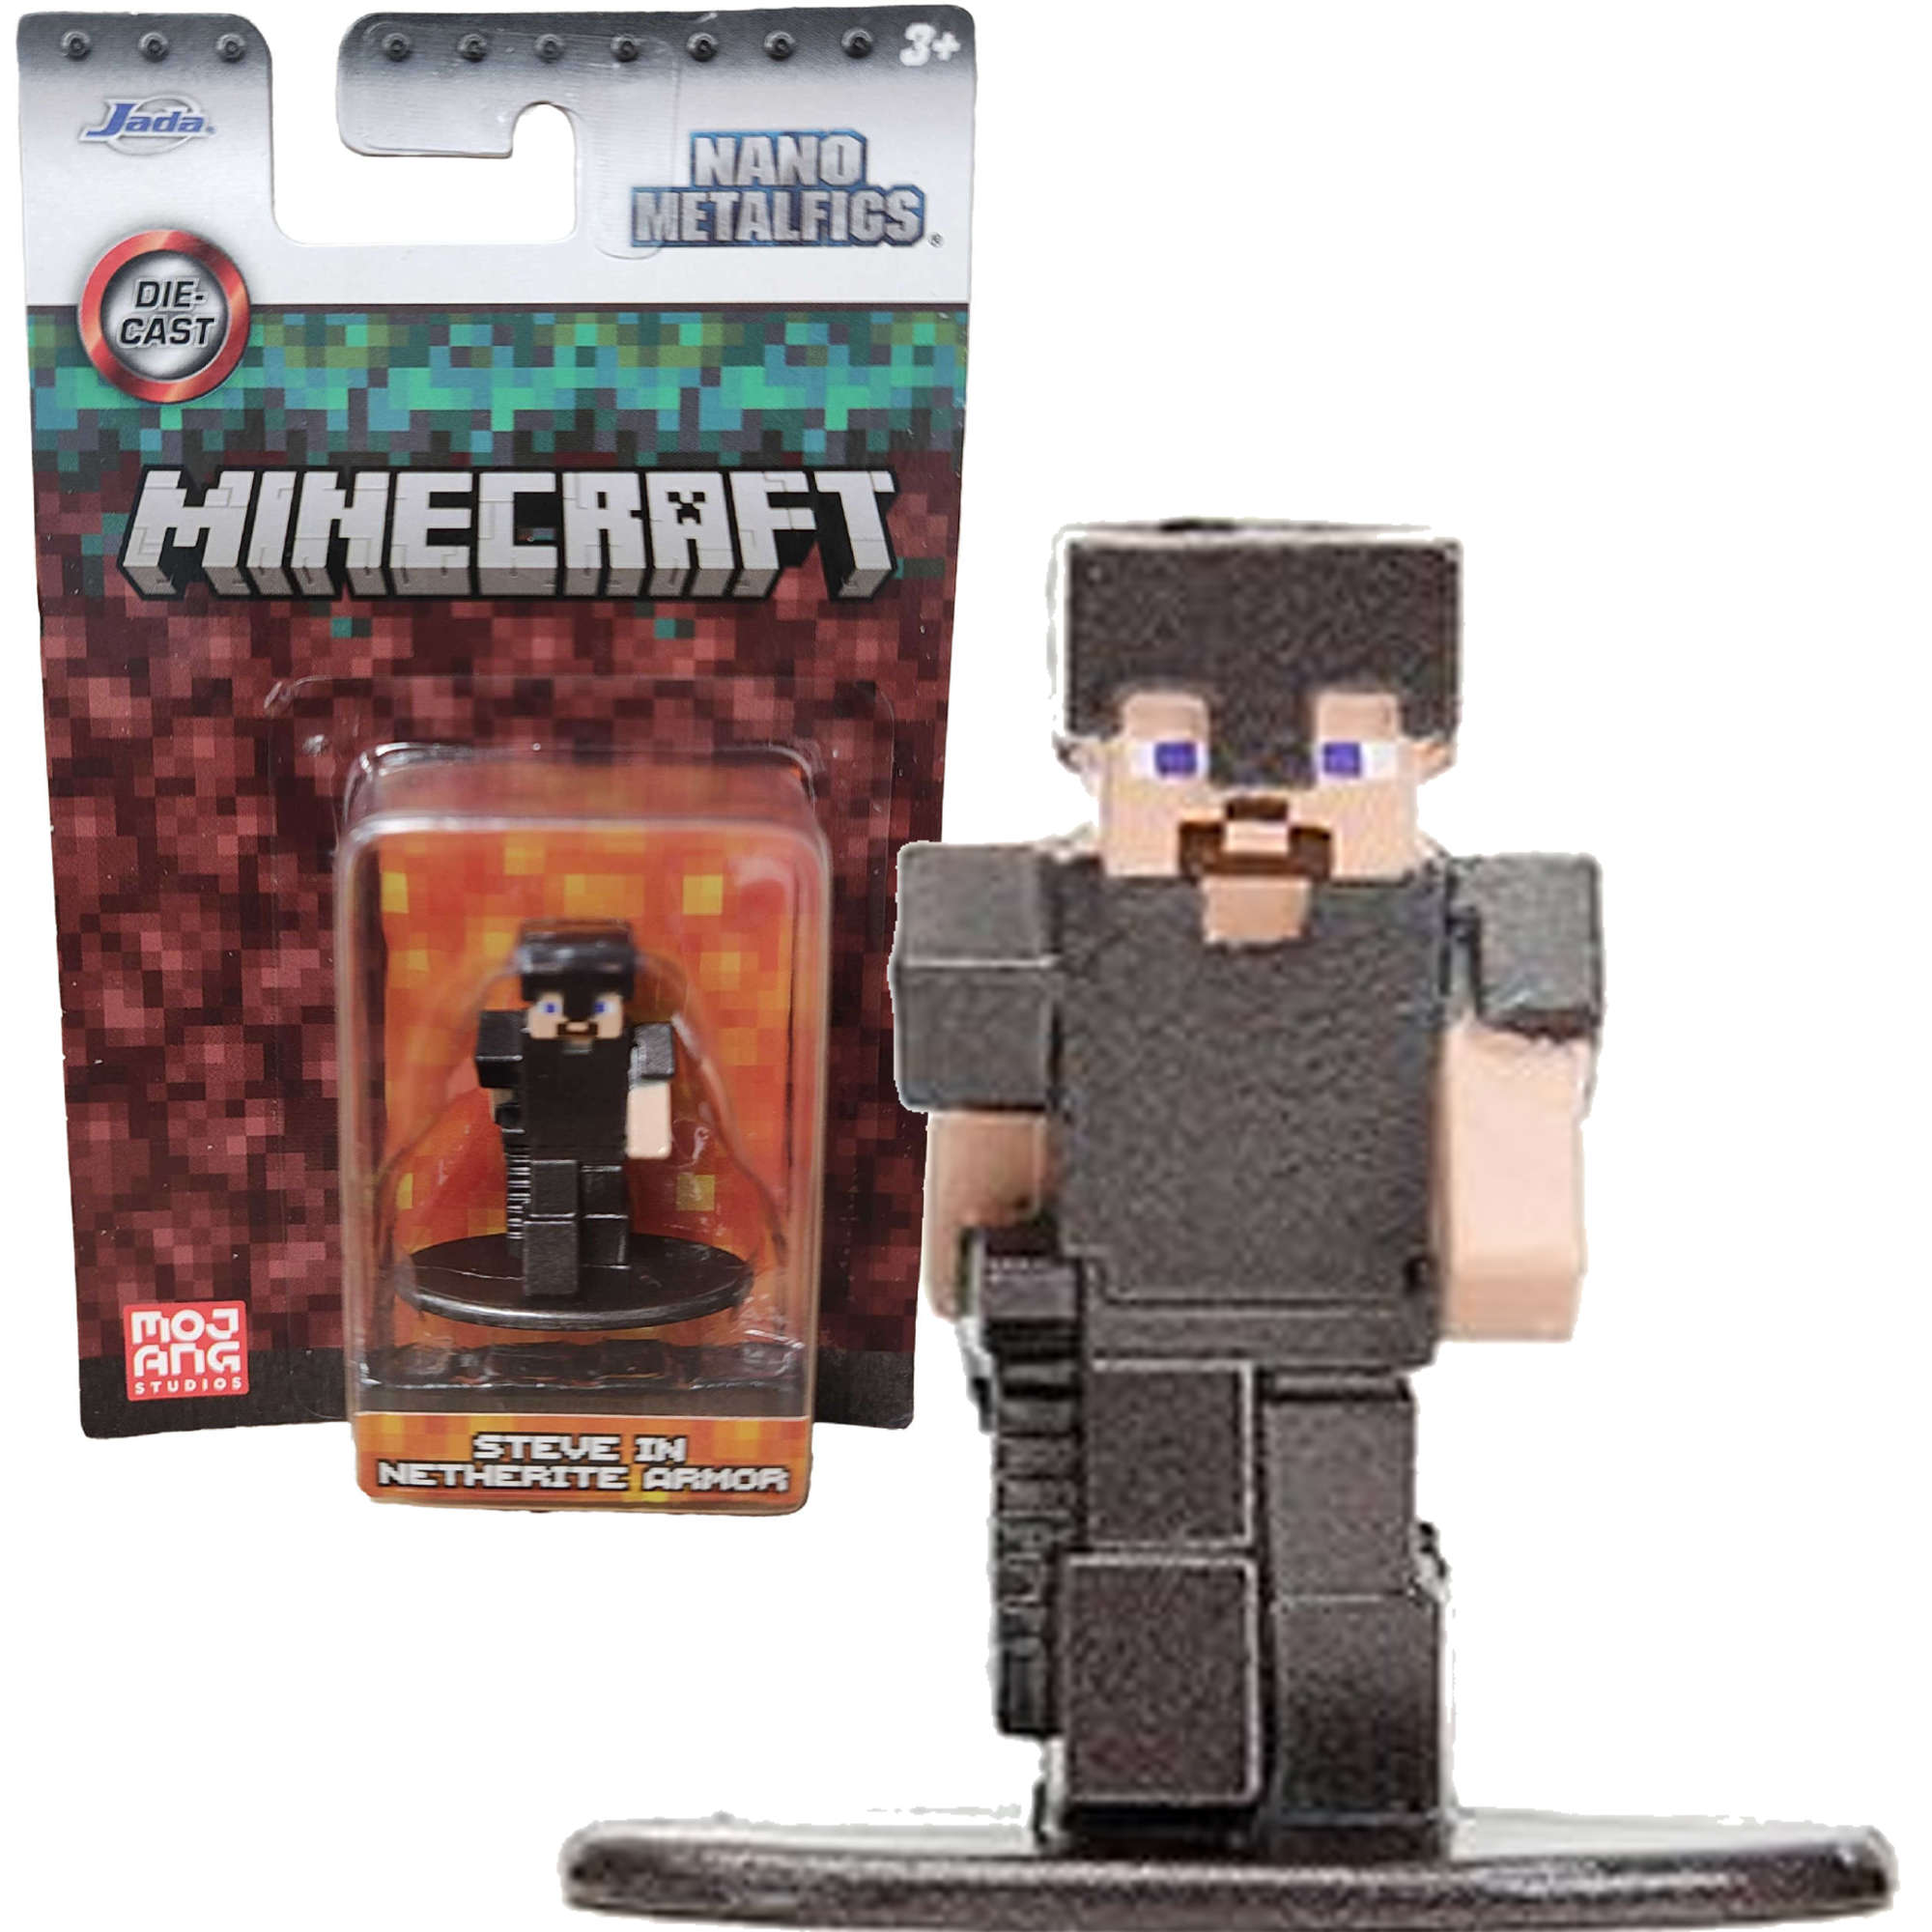 Minecraft metalowa figurka kolekcjonerska Steve in Netherite armor Nano metalfigs 4 cm Jada